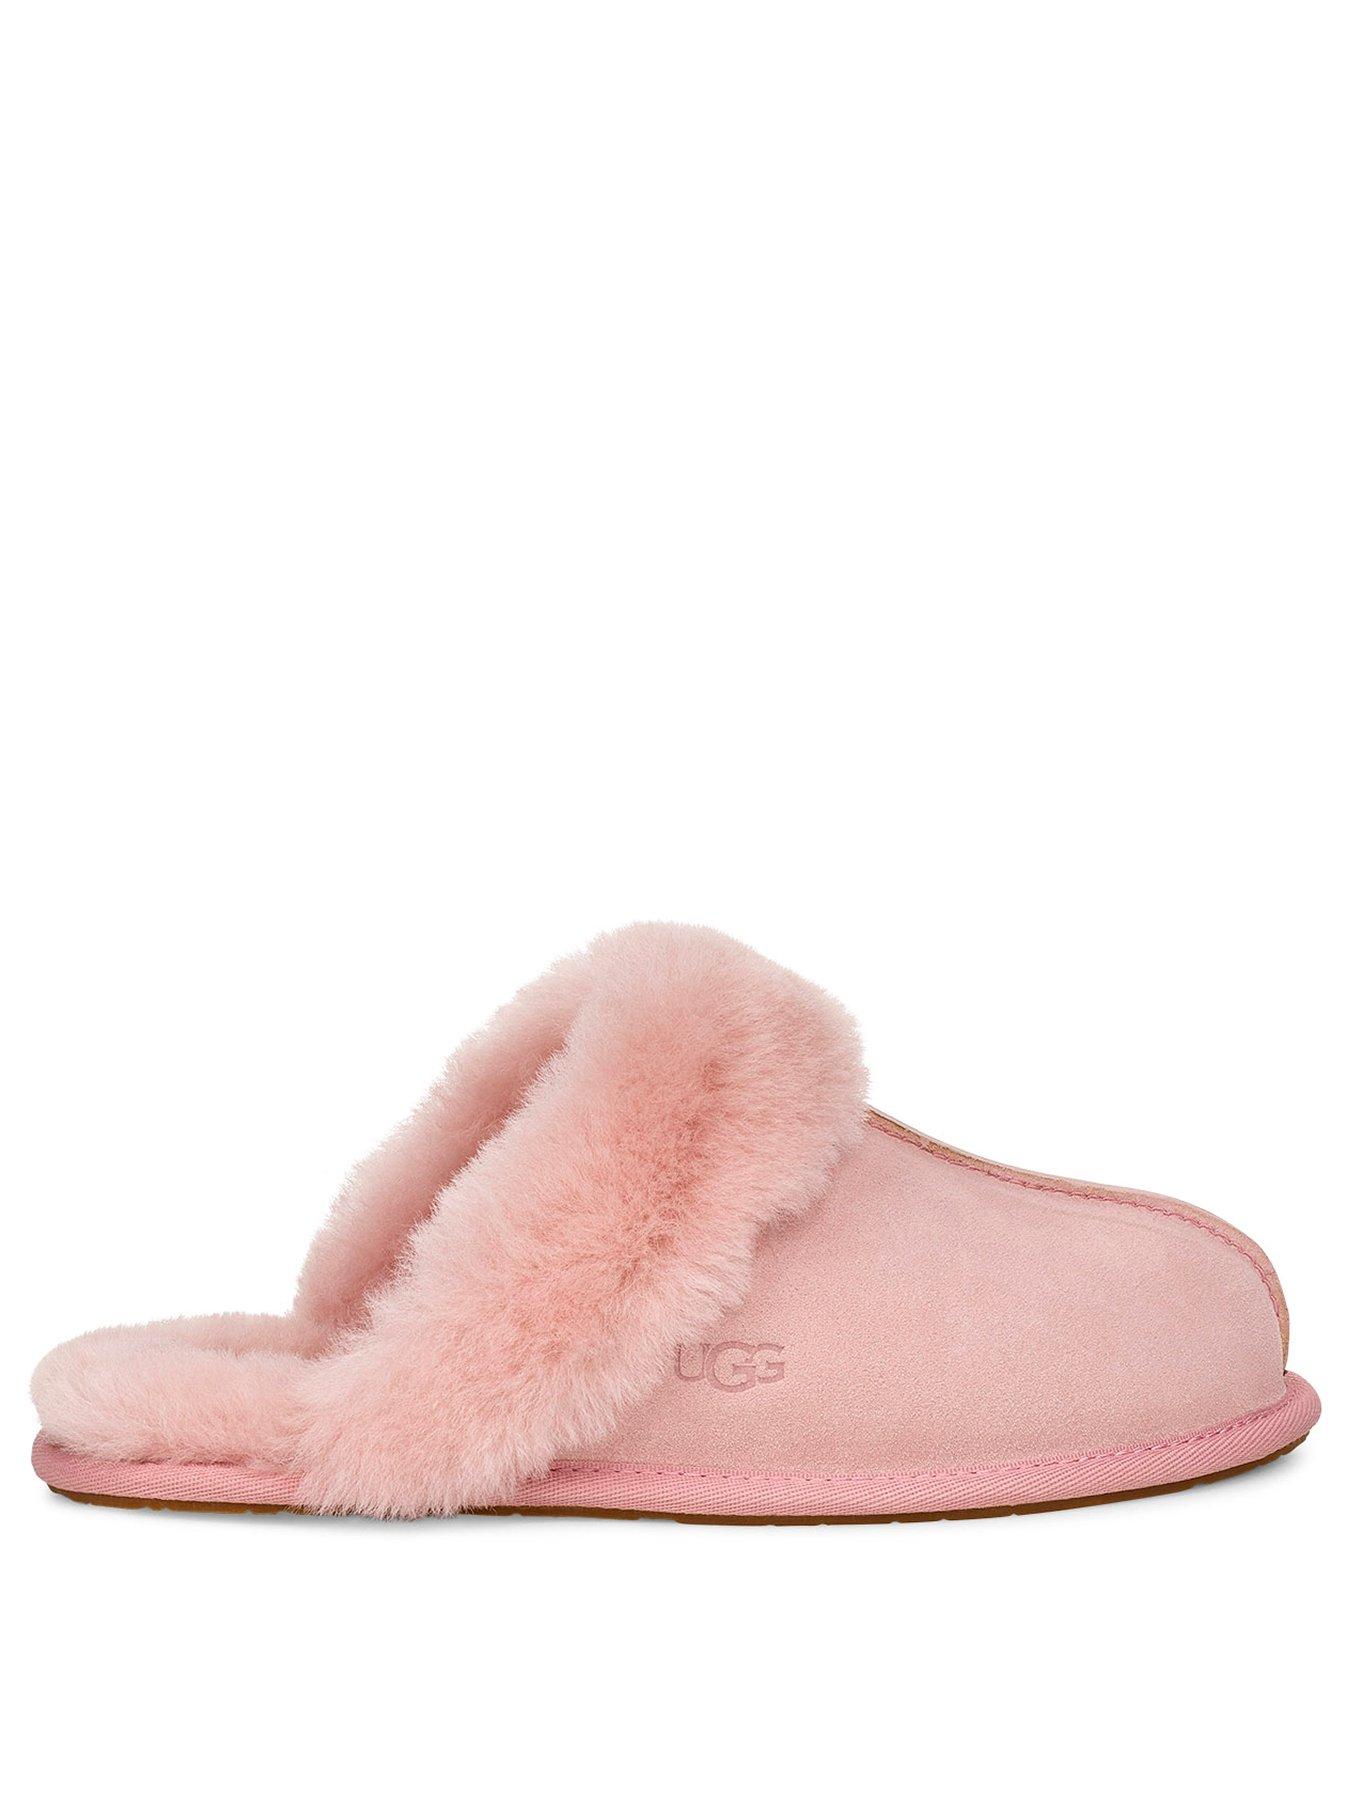 pink slipper uggs